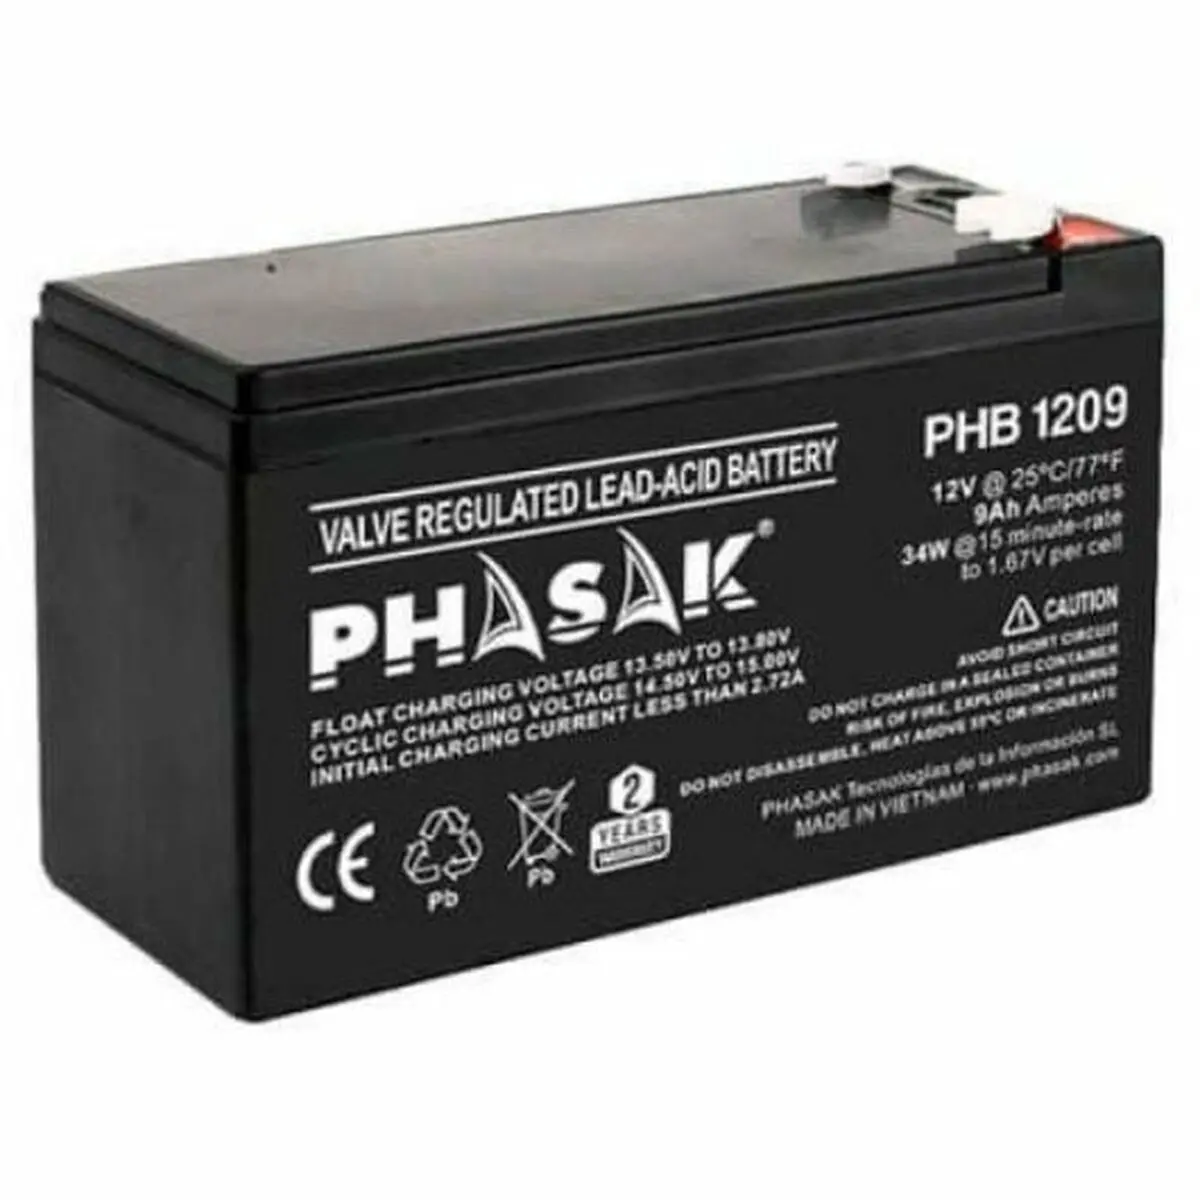 Batteria per Gruppo di Continuità UPS Phasak PHB 1209 12 V